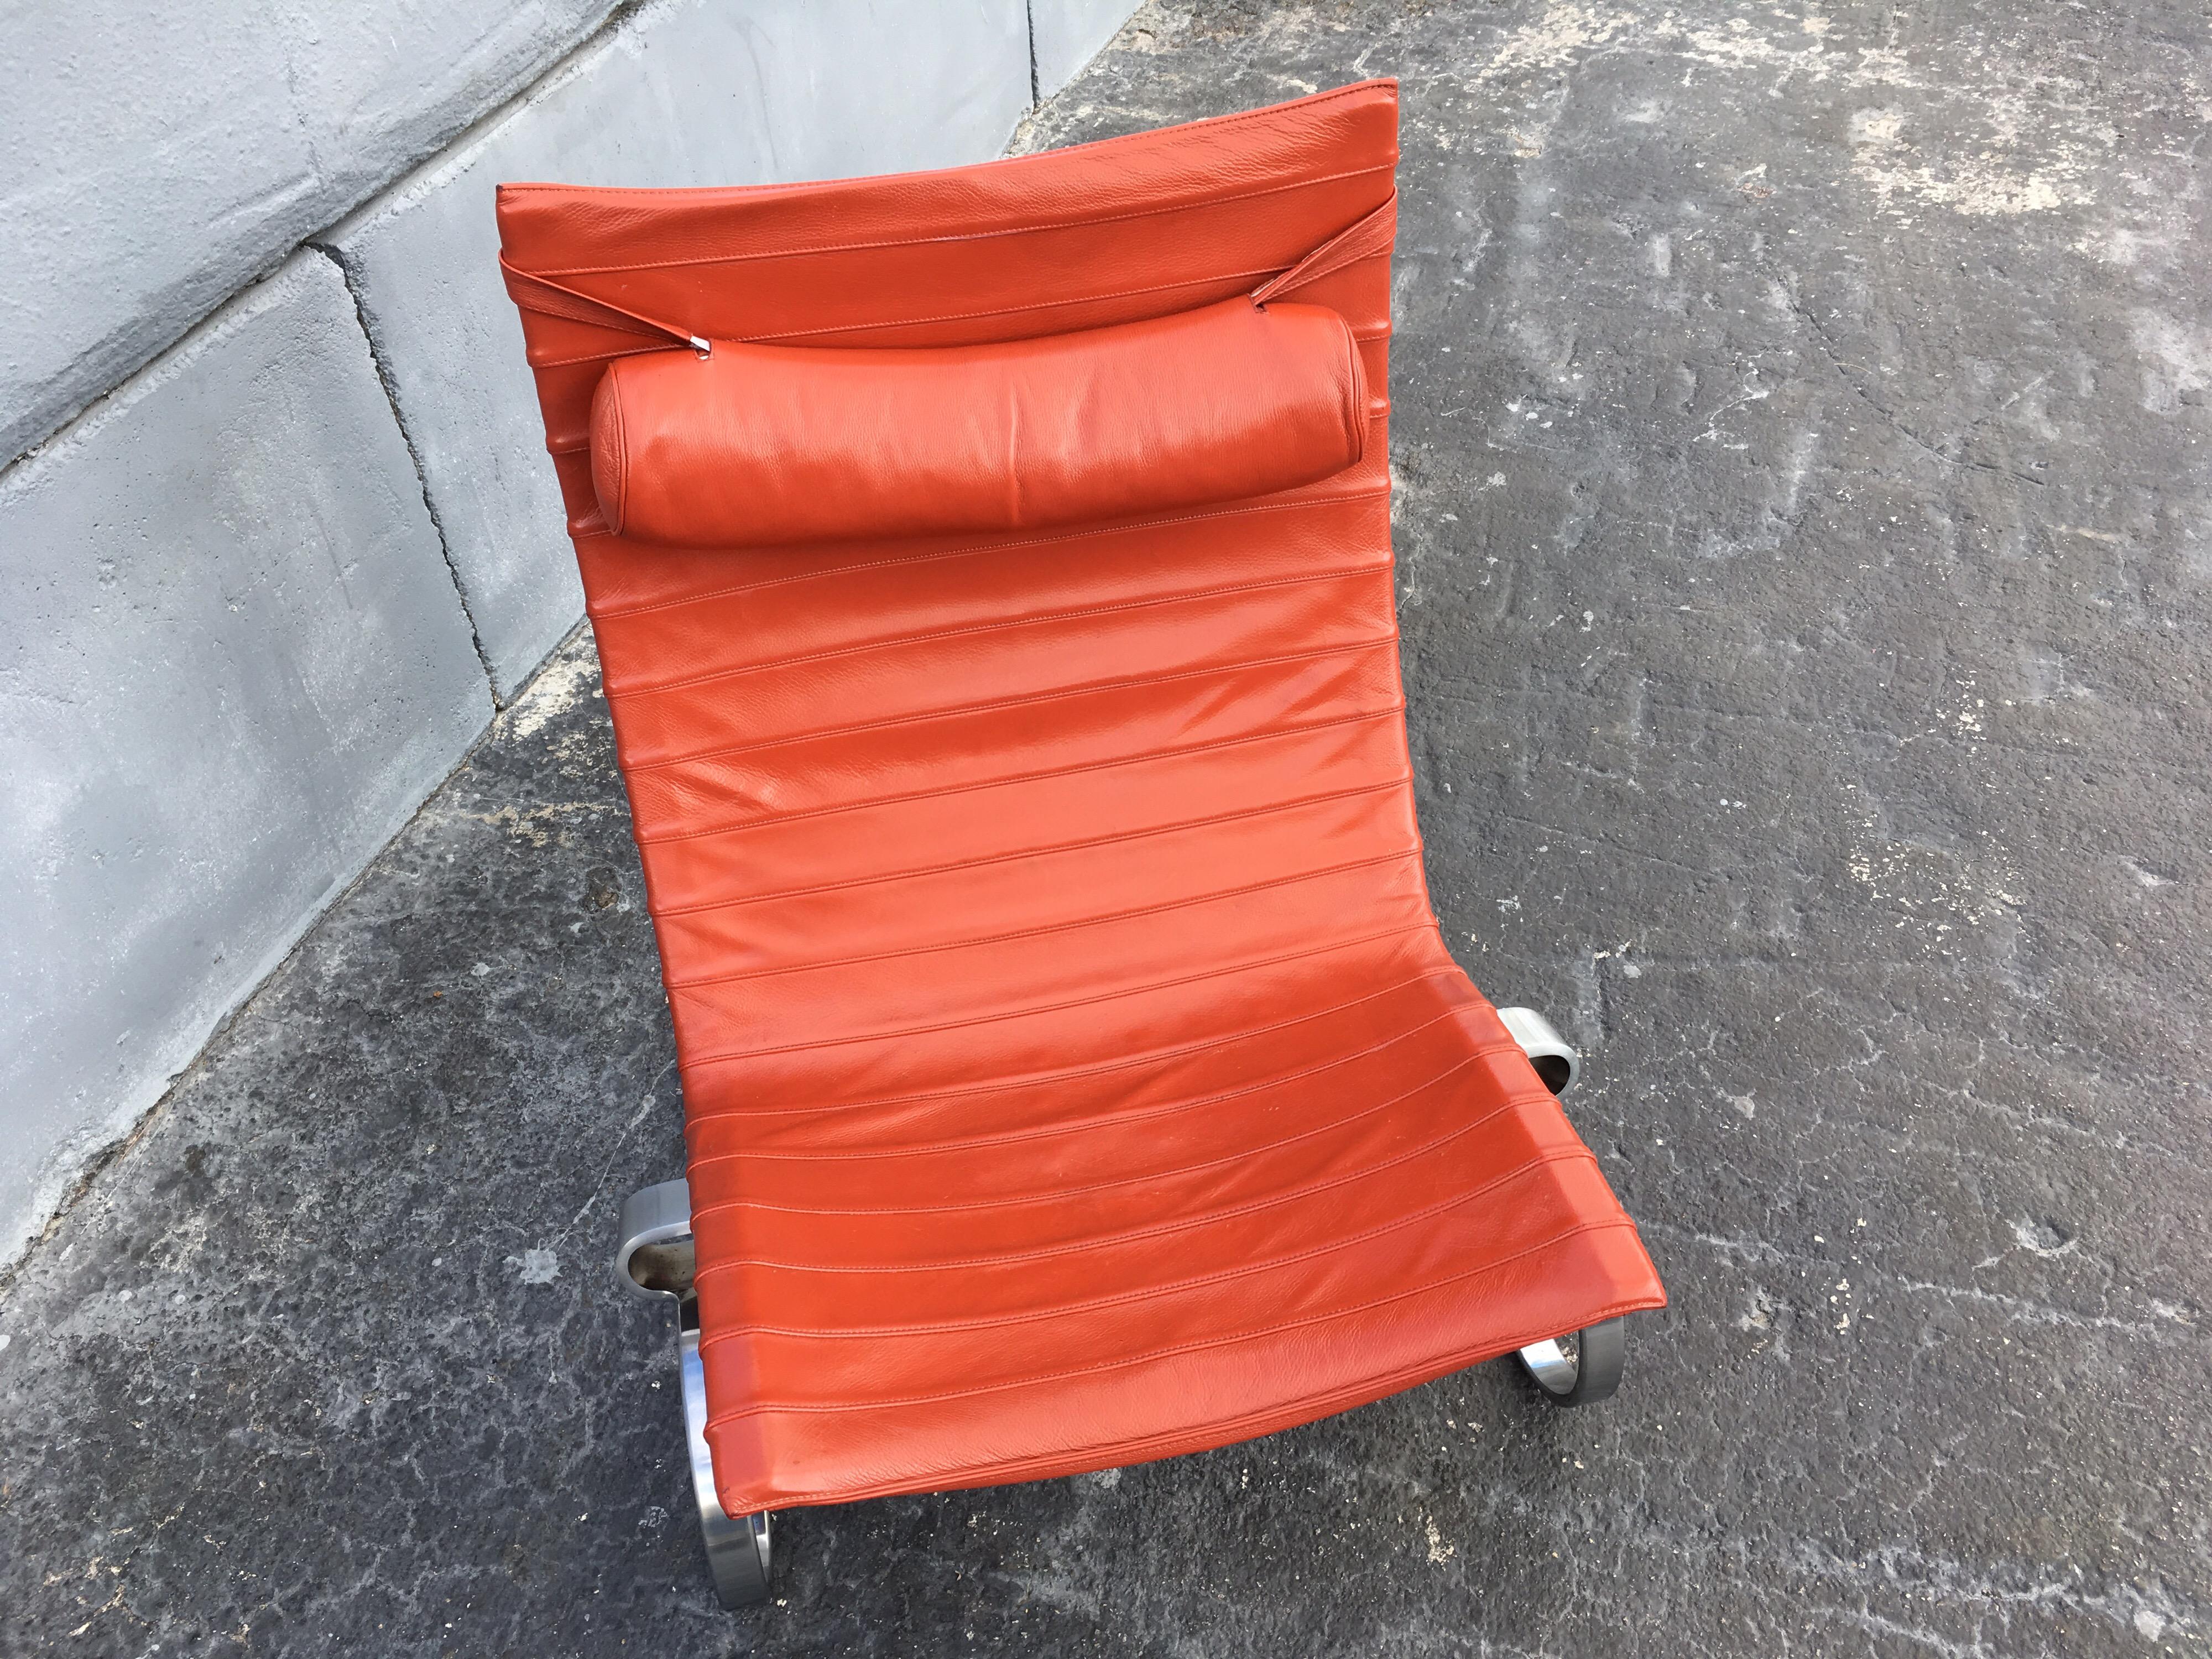 Steel Poul Kjaerholm PK 20 Lounge Chair Red Orange Leather